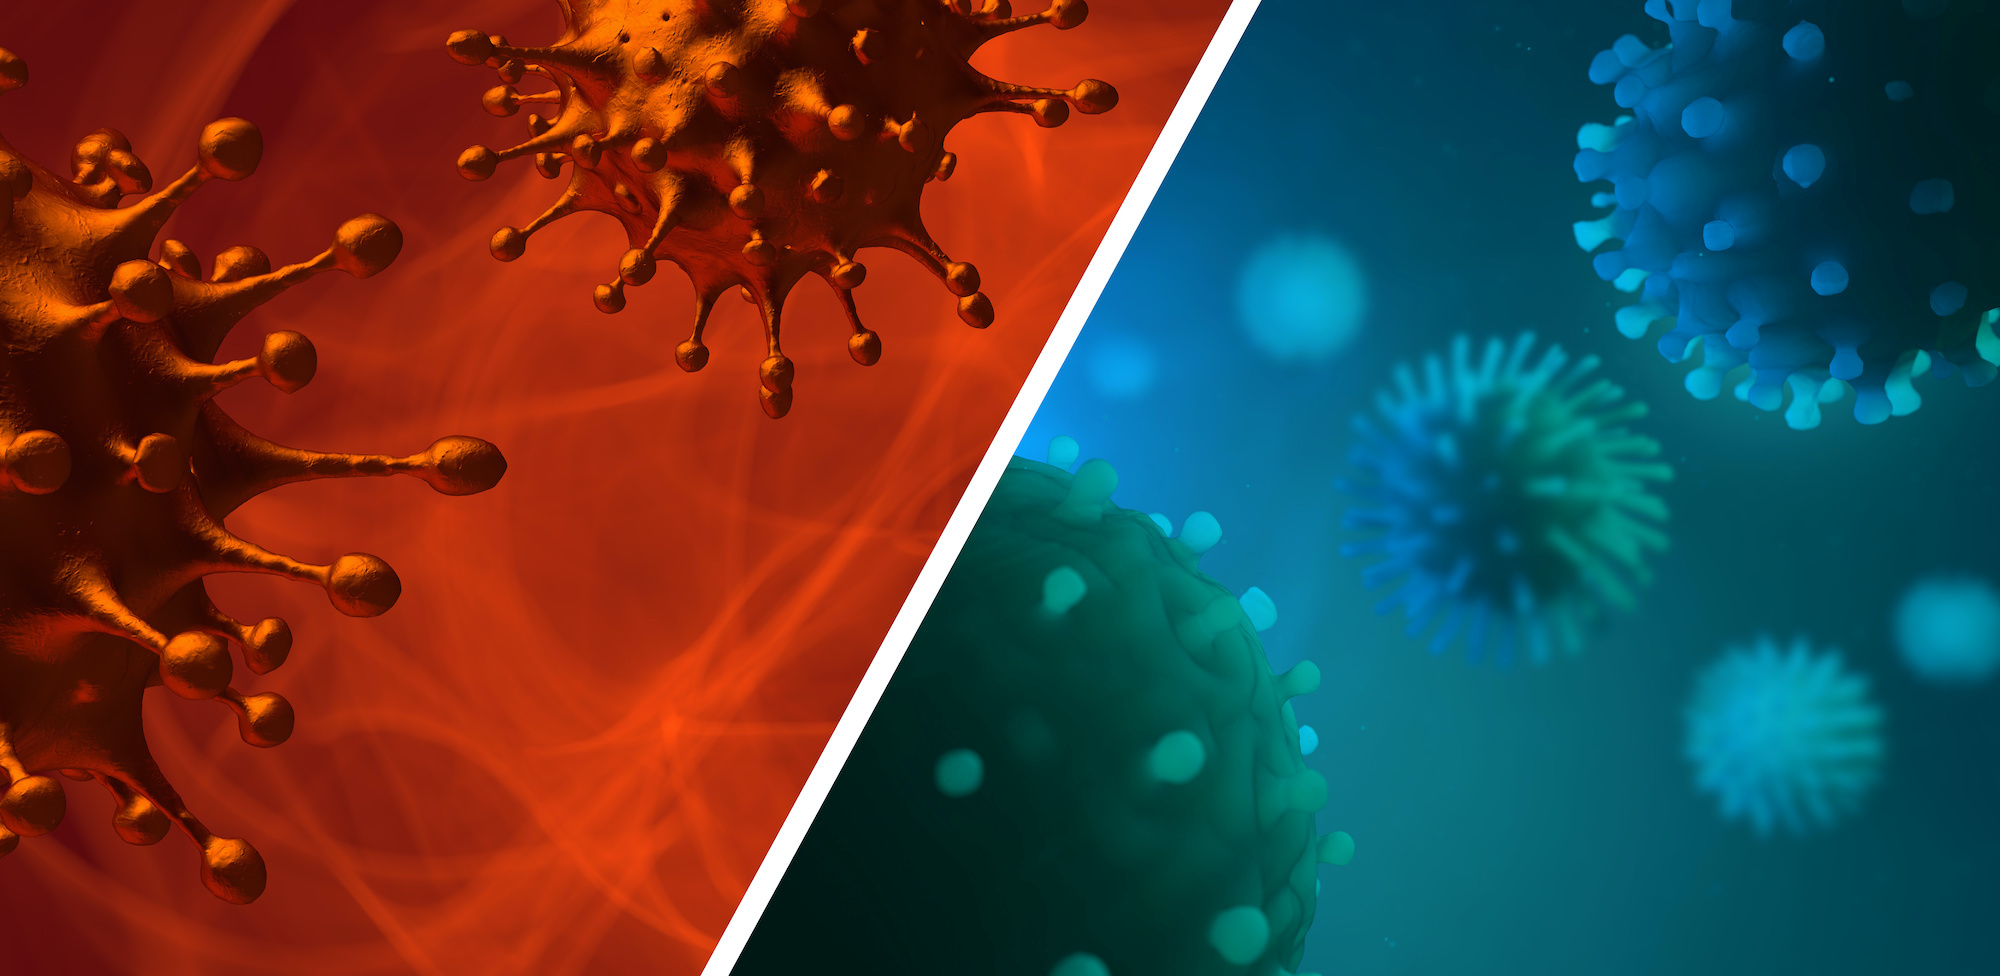 Comparaison entre la grippe et la coronavirus. © CROCOTHERY, Adobe Stock